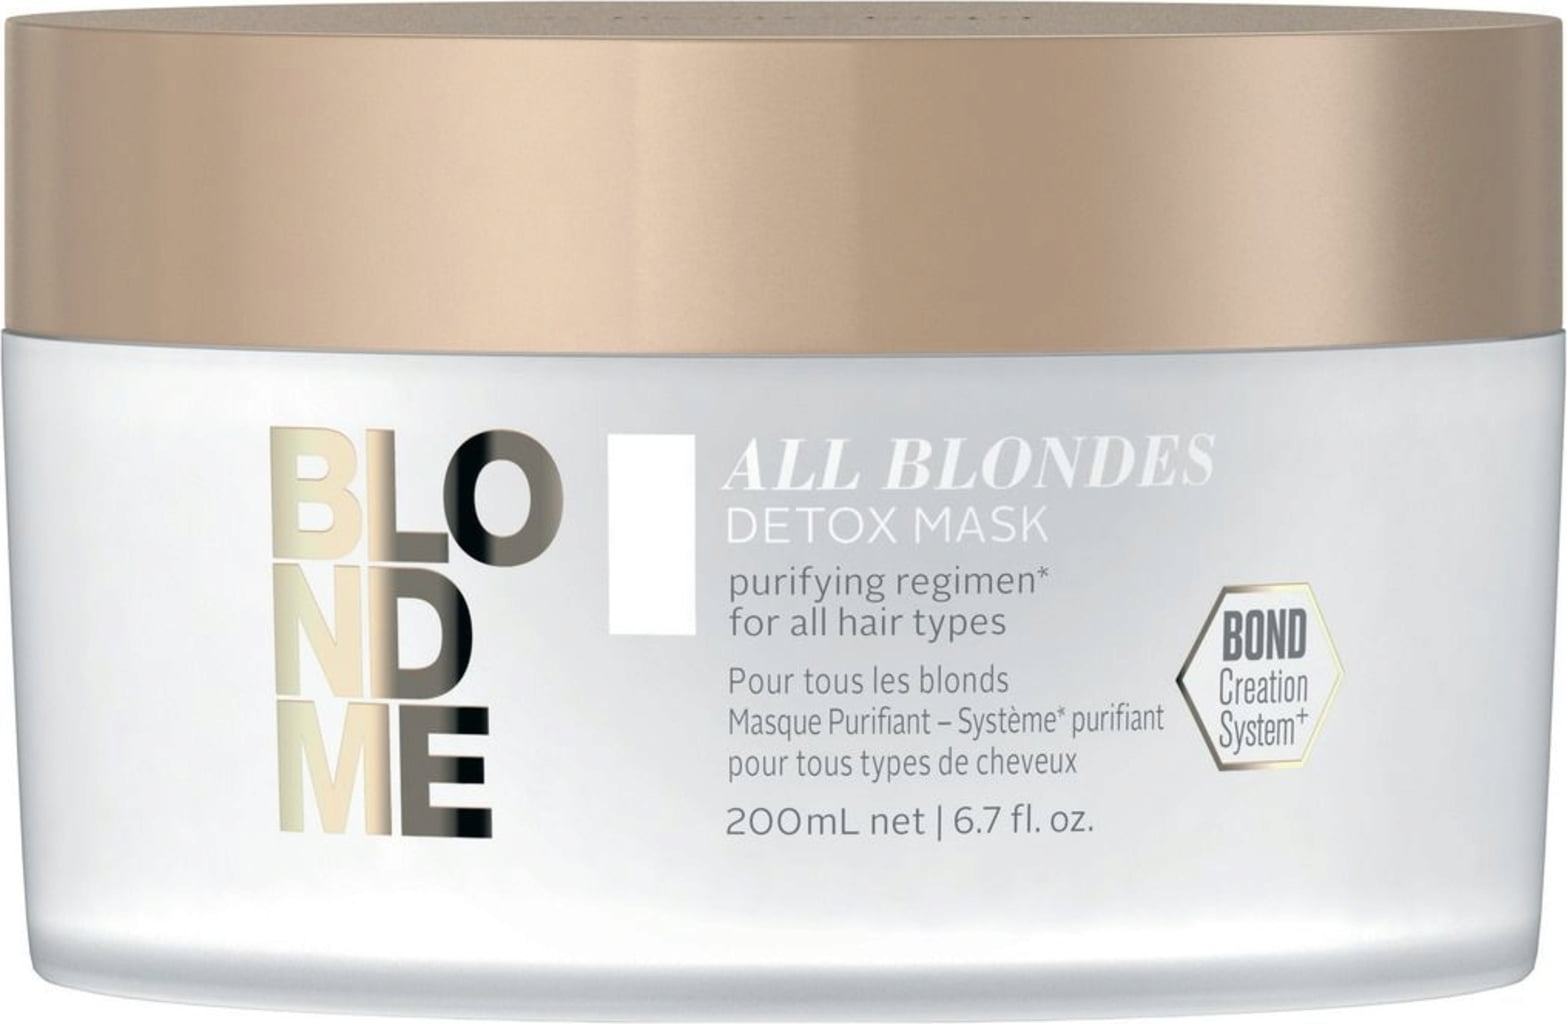 Schwarzkopf Blondme All Blondes Detox Mask 200ml - 500ml